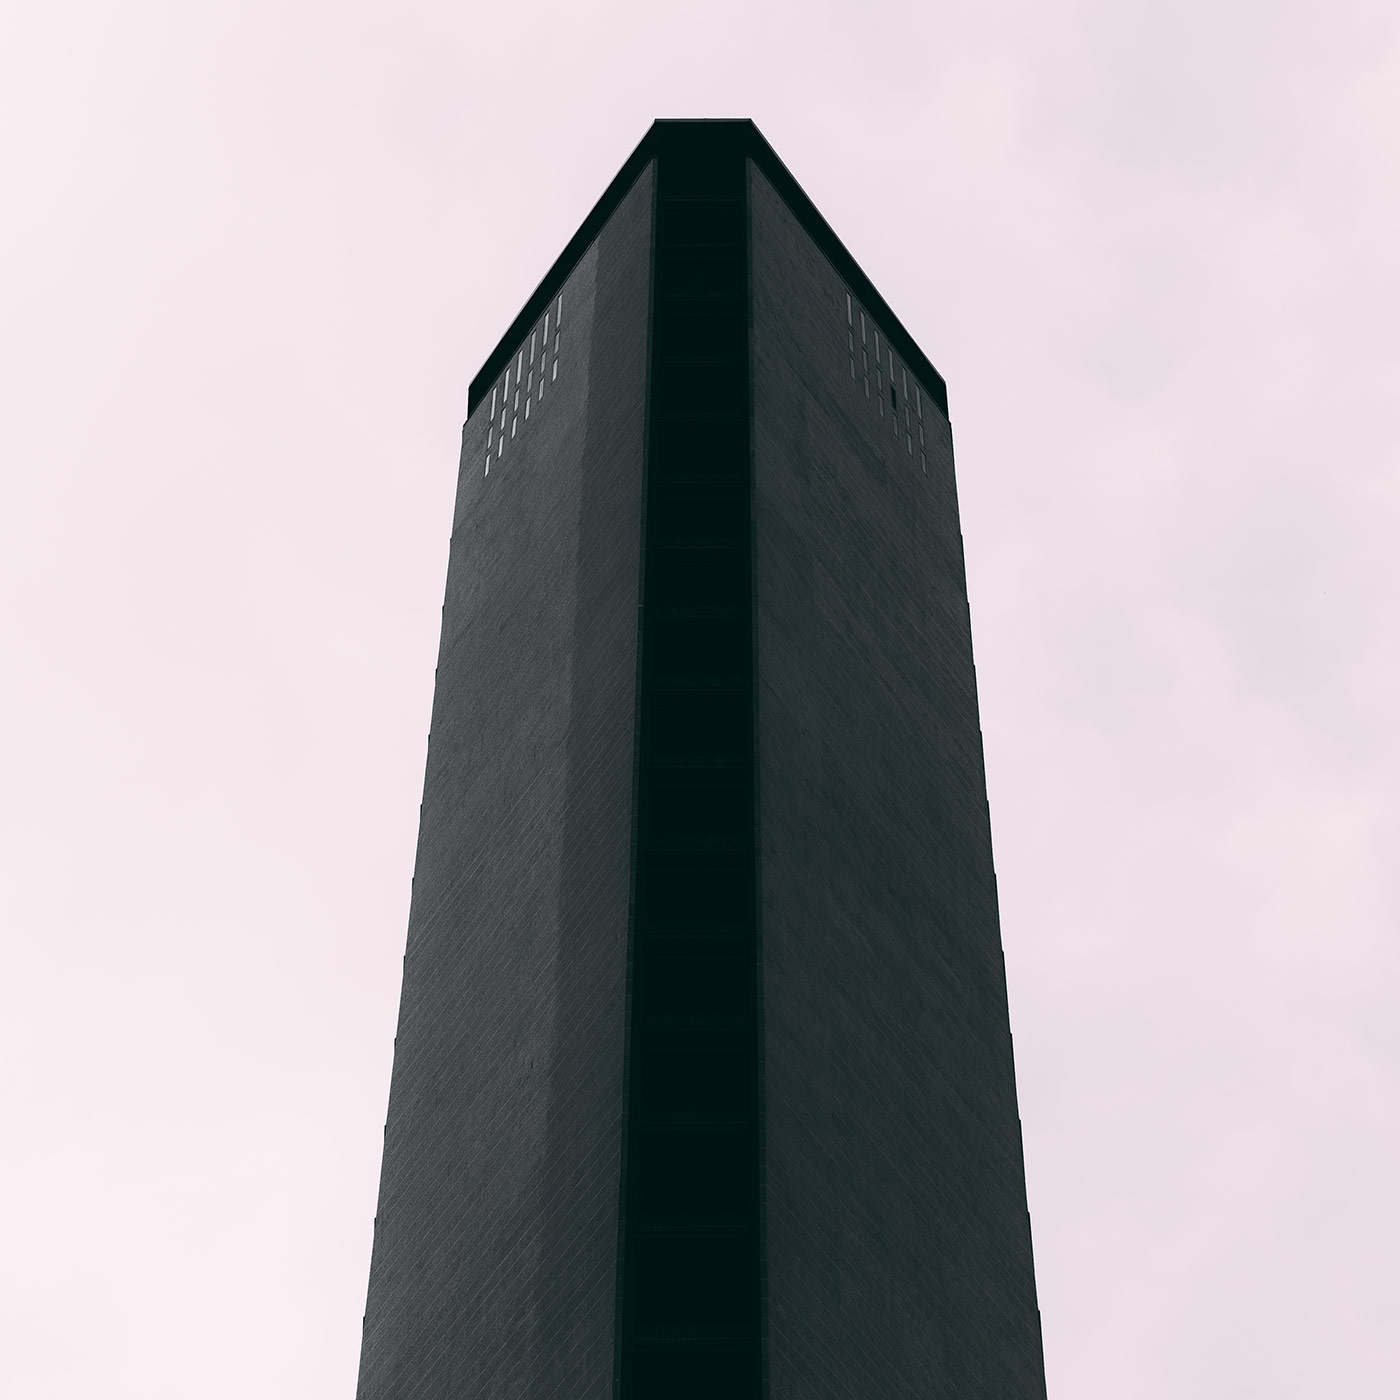 Pirelli Tower <br />Location: Milan, Italy <br />Architects: Gio Ponti and Pier Luigi Nervi